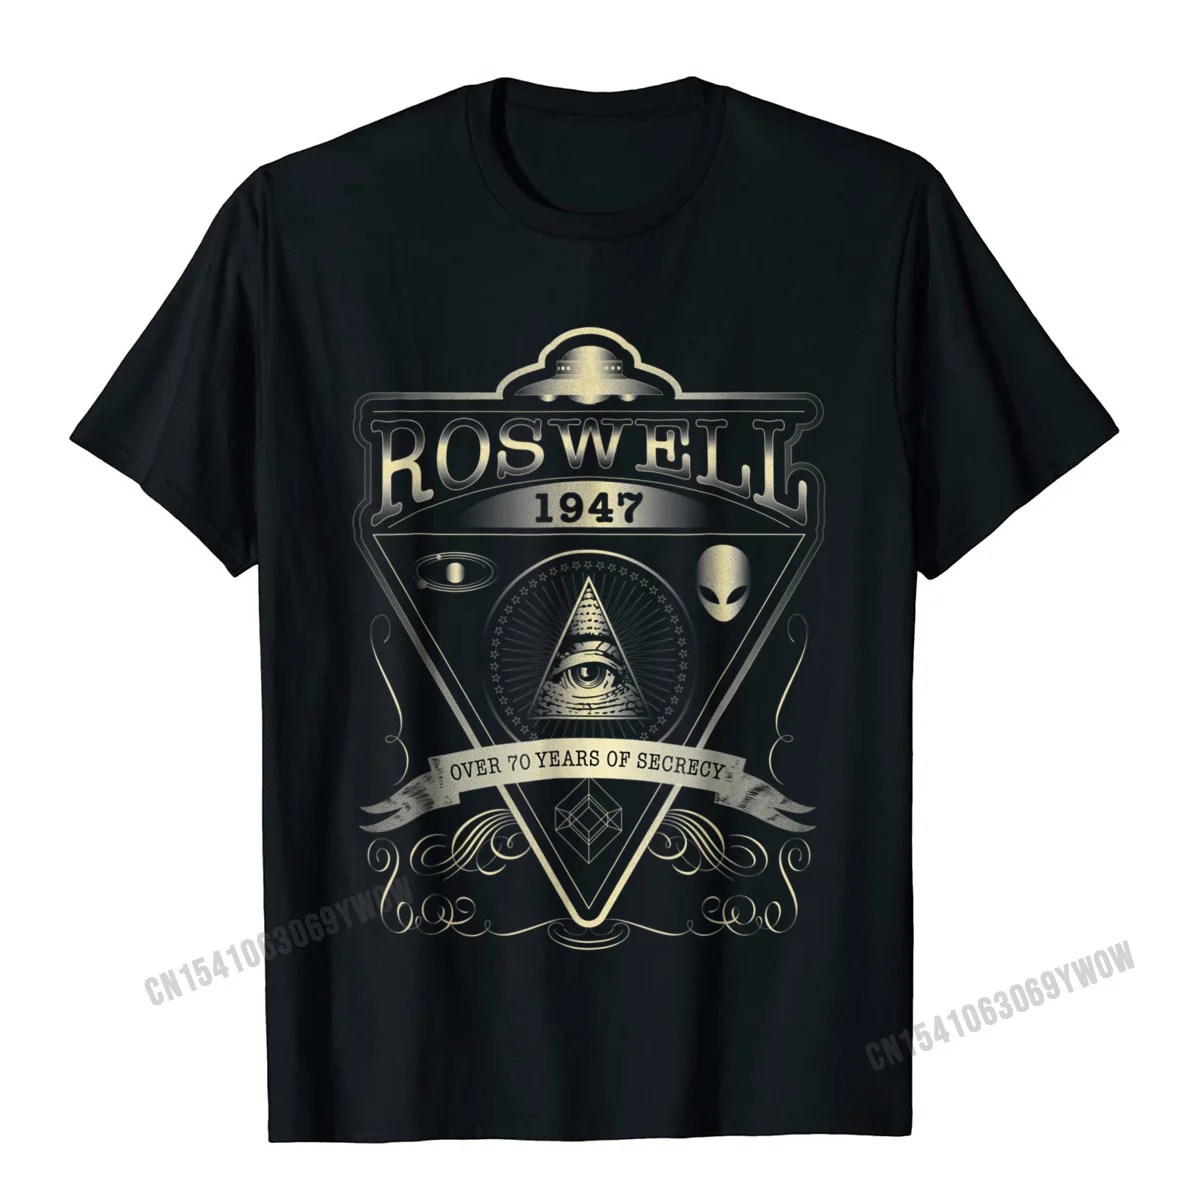 Roswell 1947 Alien T Shirt - Vintage Style UFO Area 51 Camisas Men Brand Men T Shirts Cotton Tops T Shirt Summer